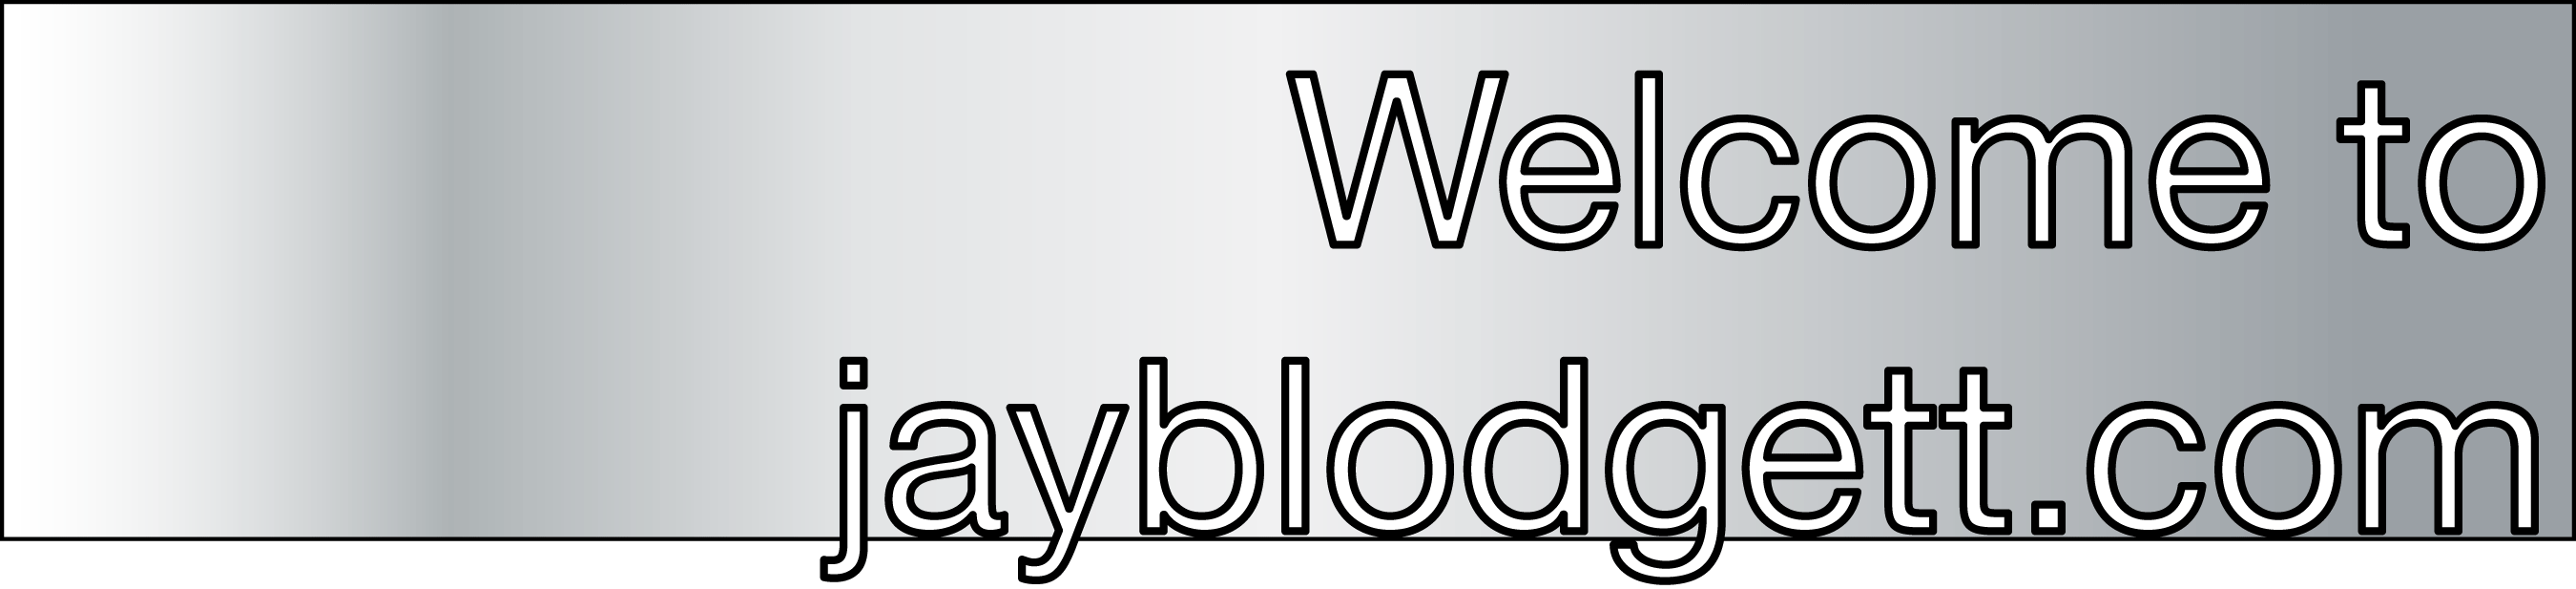 Welcome to jayblodgett.com